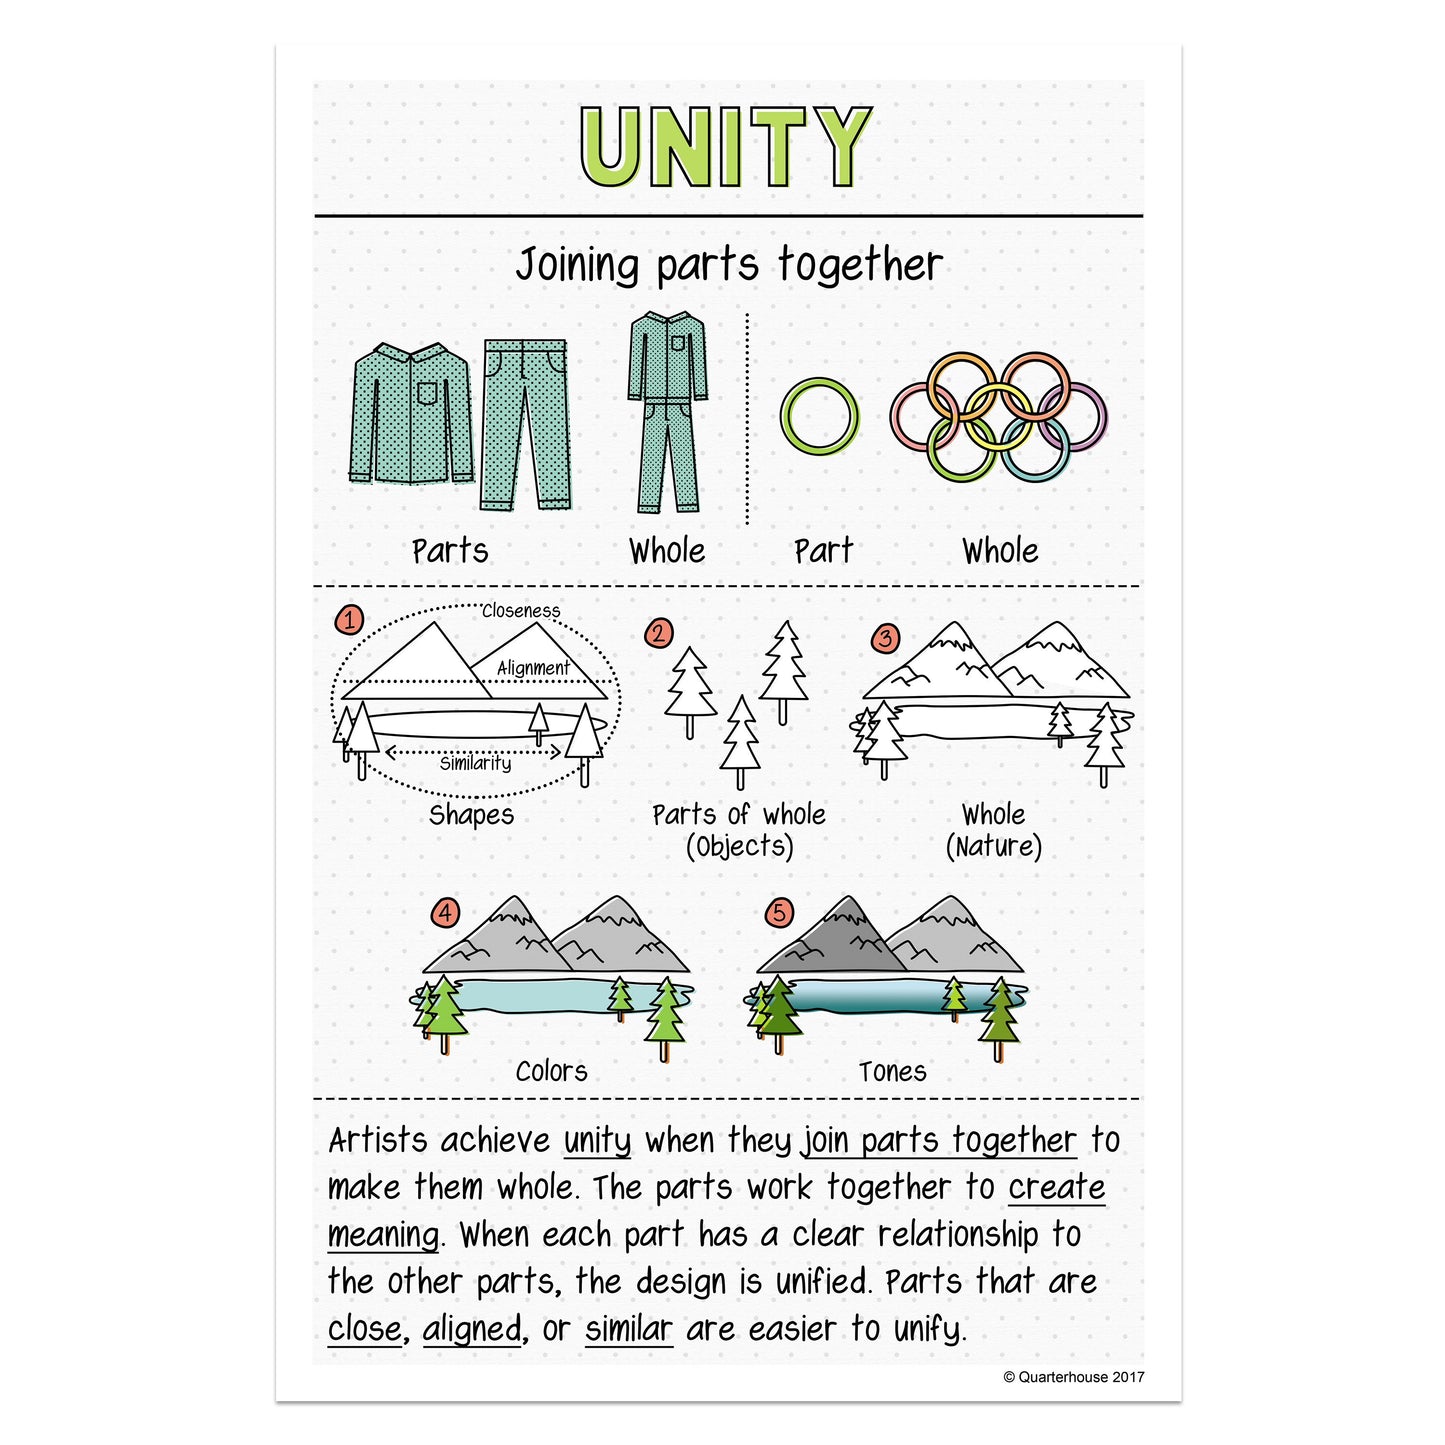 Quarterhouse Principles of Design - Unity Poster, Art Classroom Materials for Teachers